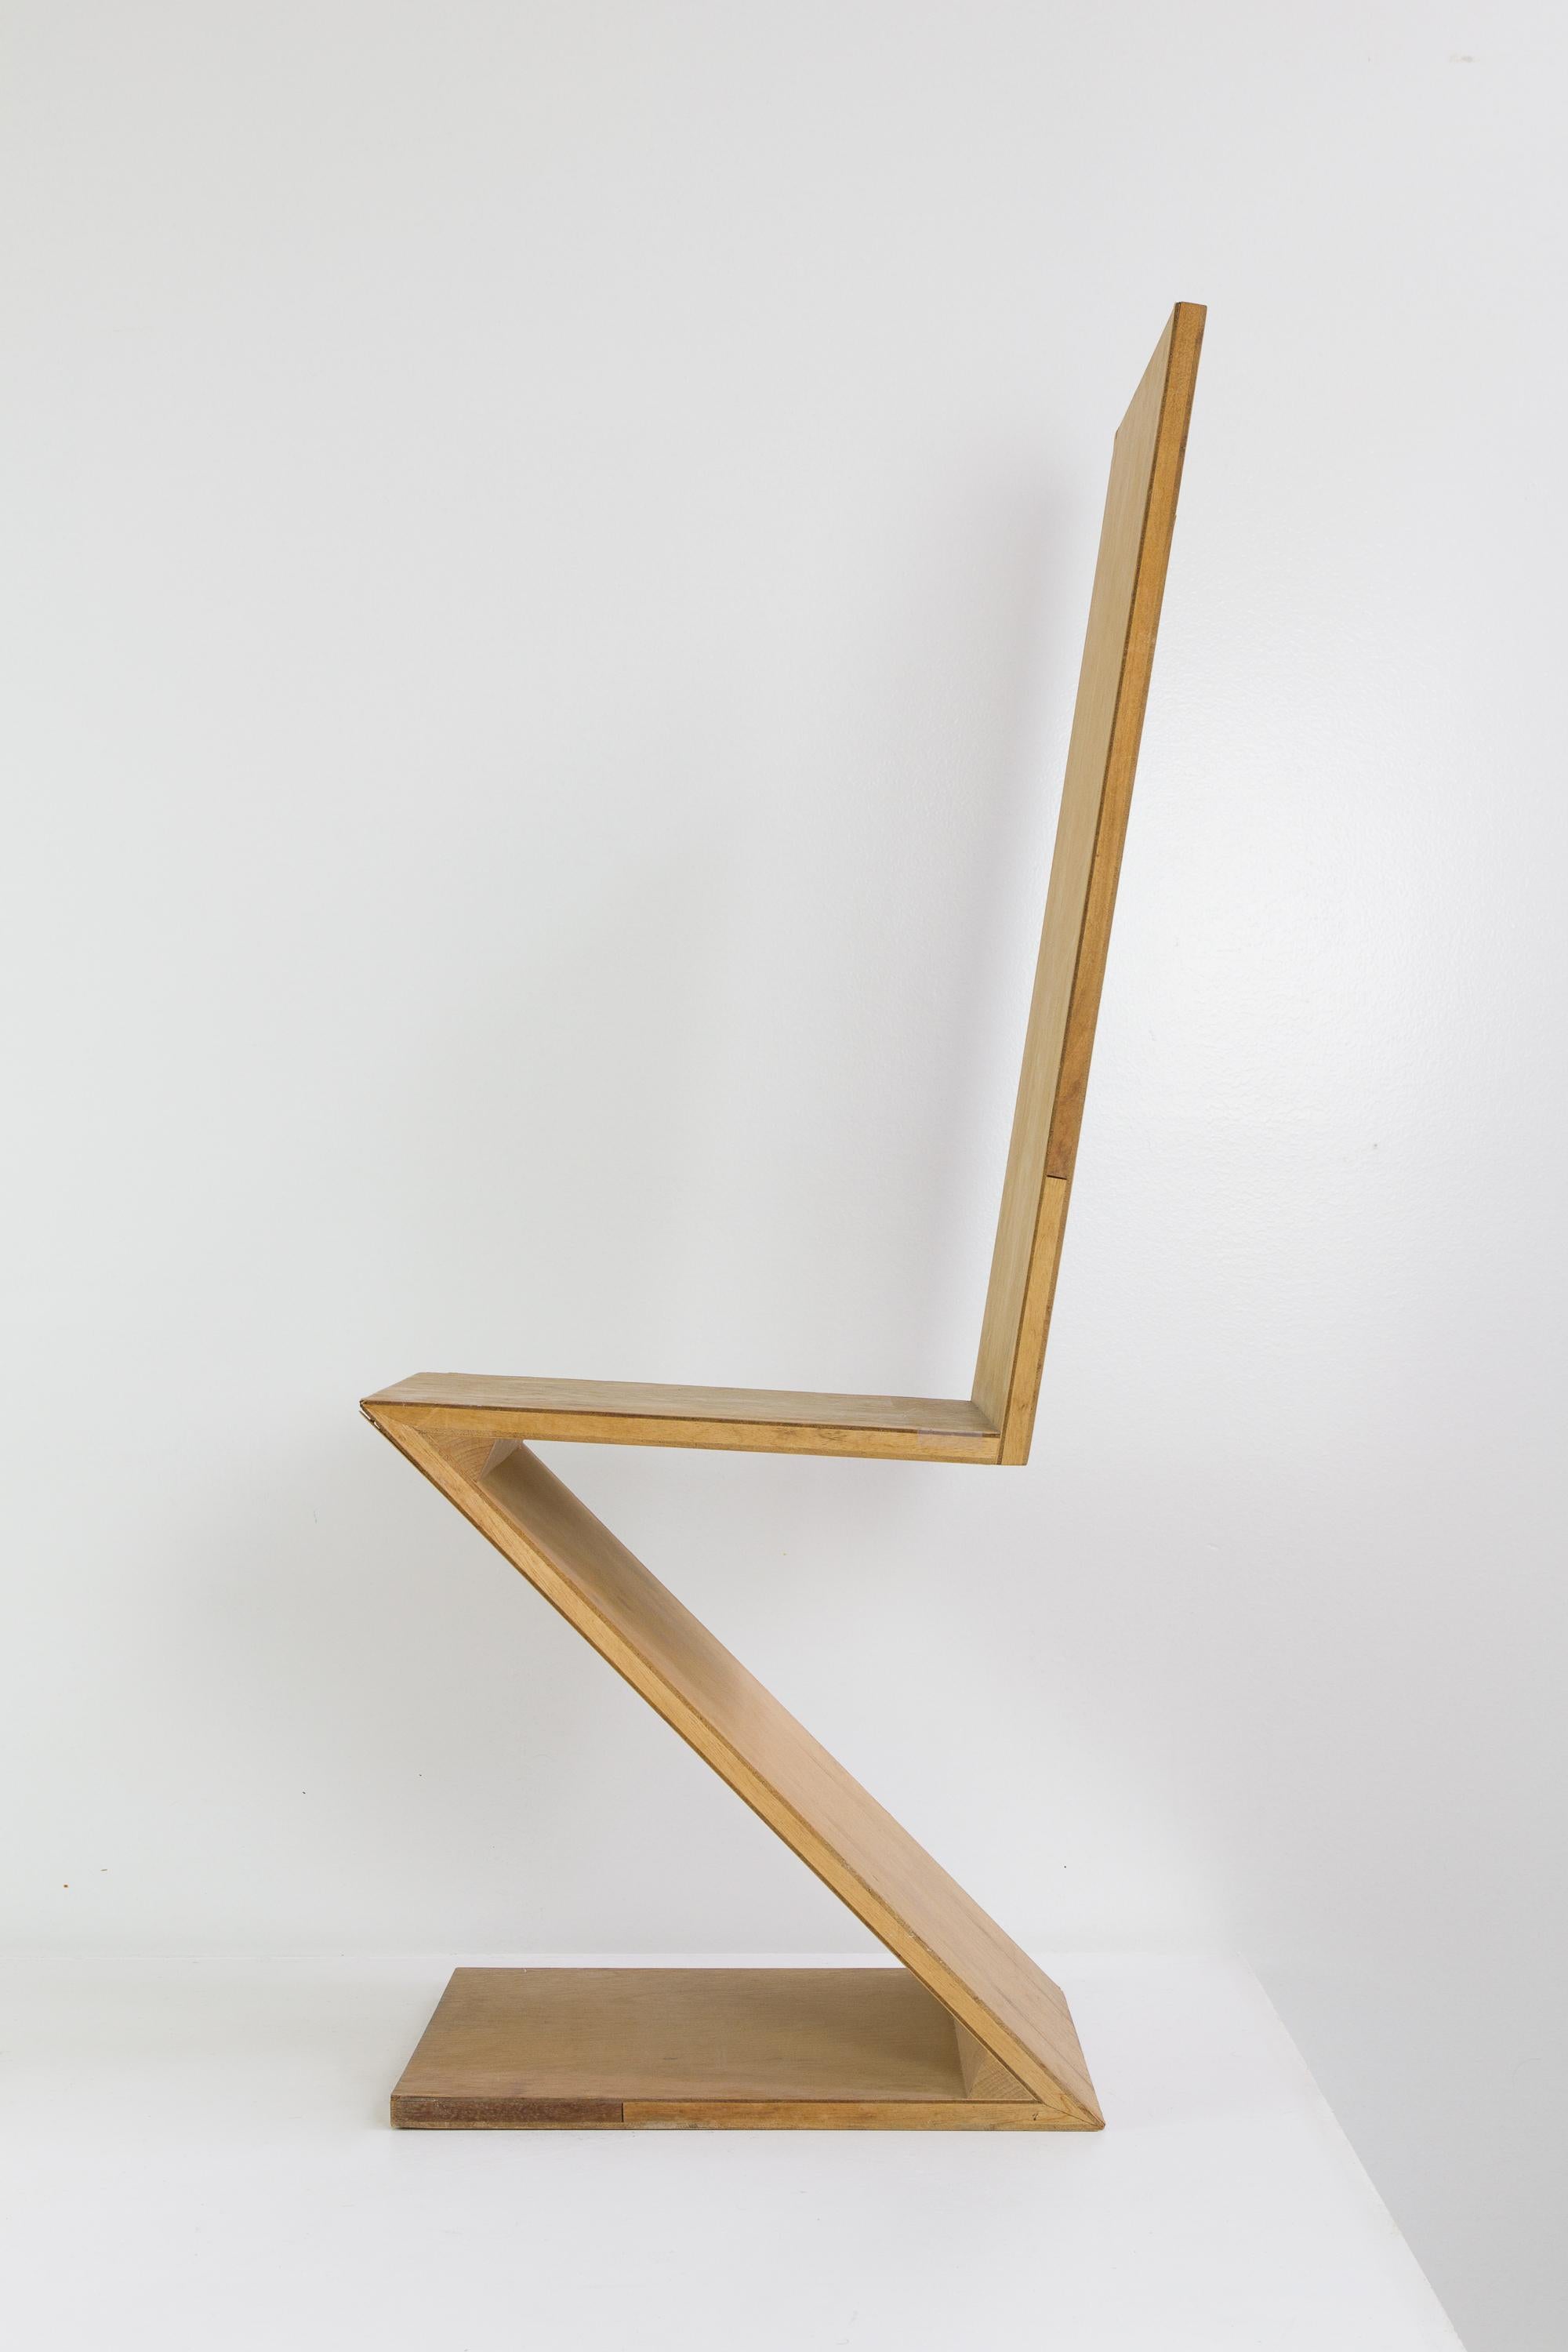 De Stijl Handmade Plywood Zig-Zag Chairs